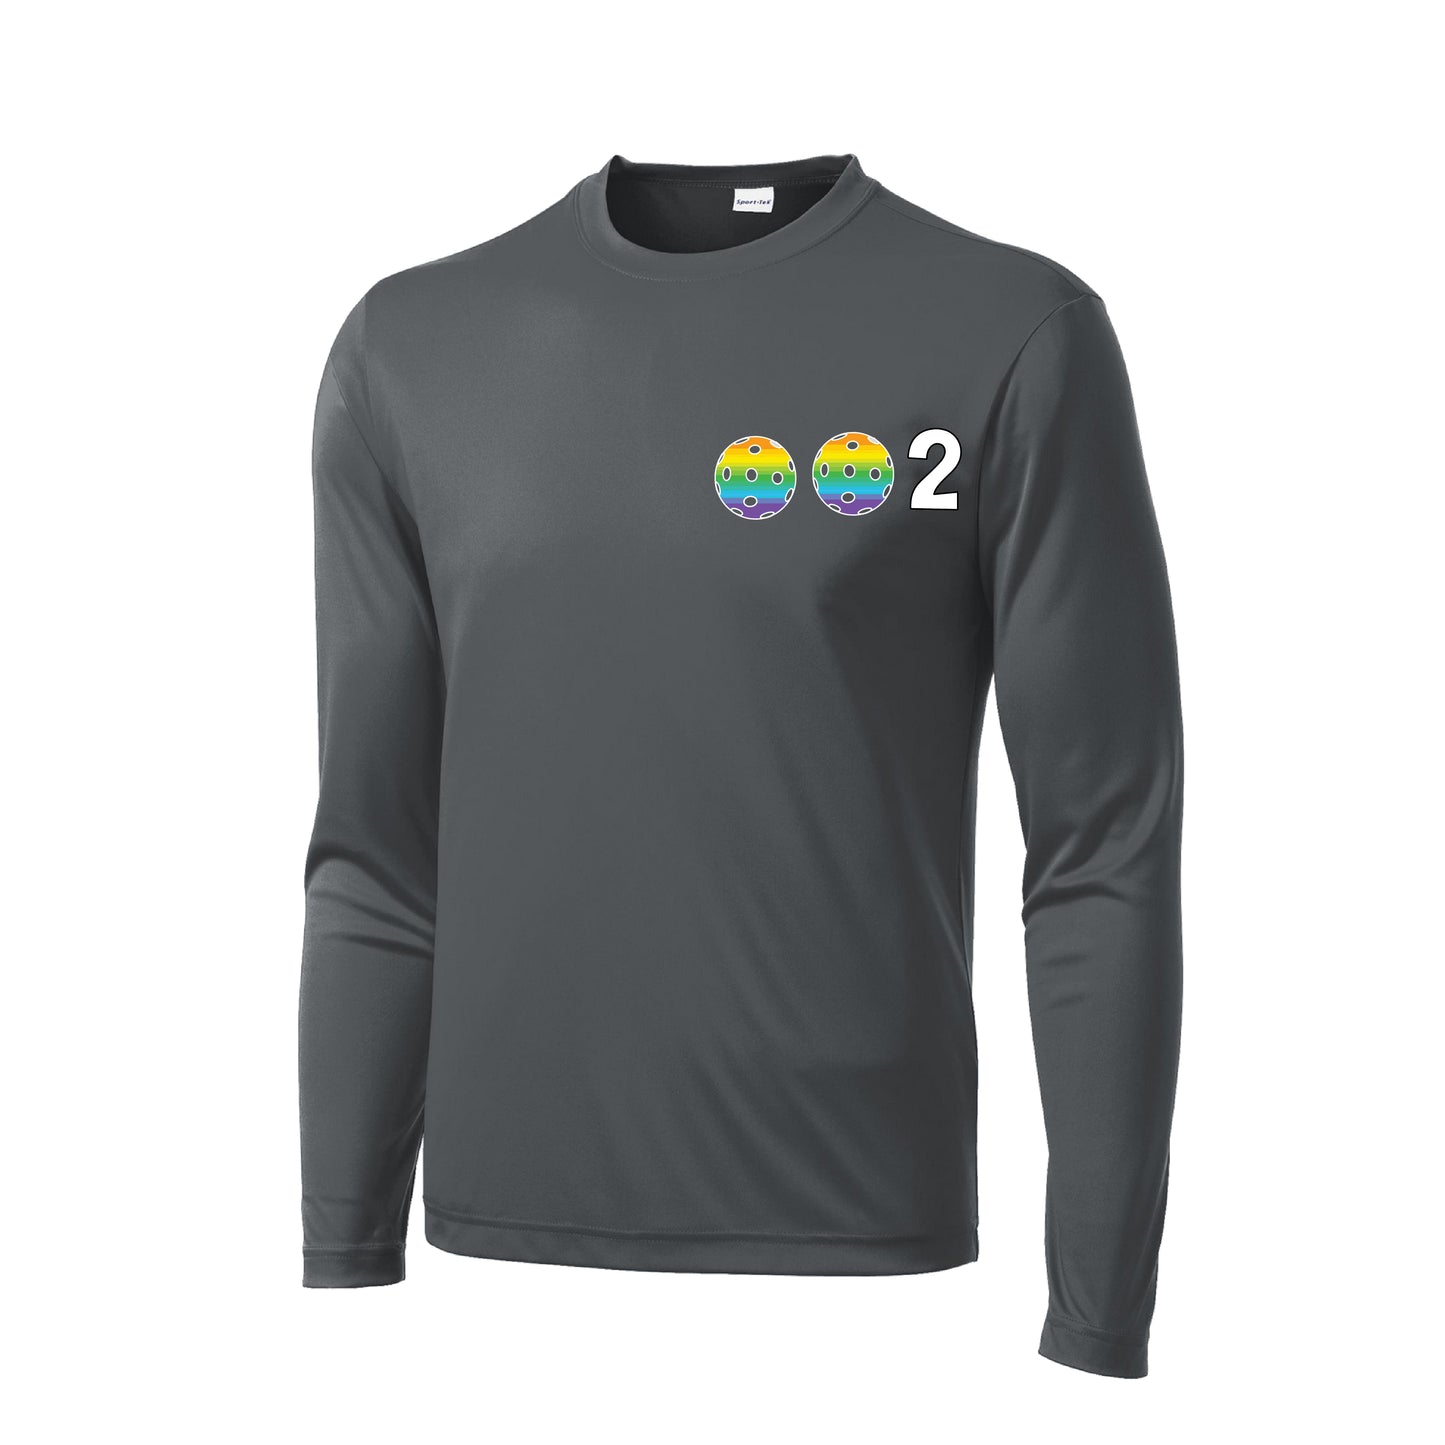 002 With Pickleballs (Cyan Purple Rainbow) Customizable | Men's Long Sleeve Athletic Shirt | 100% Polyester